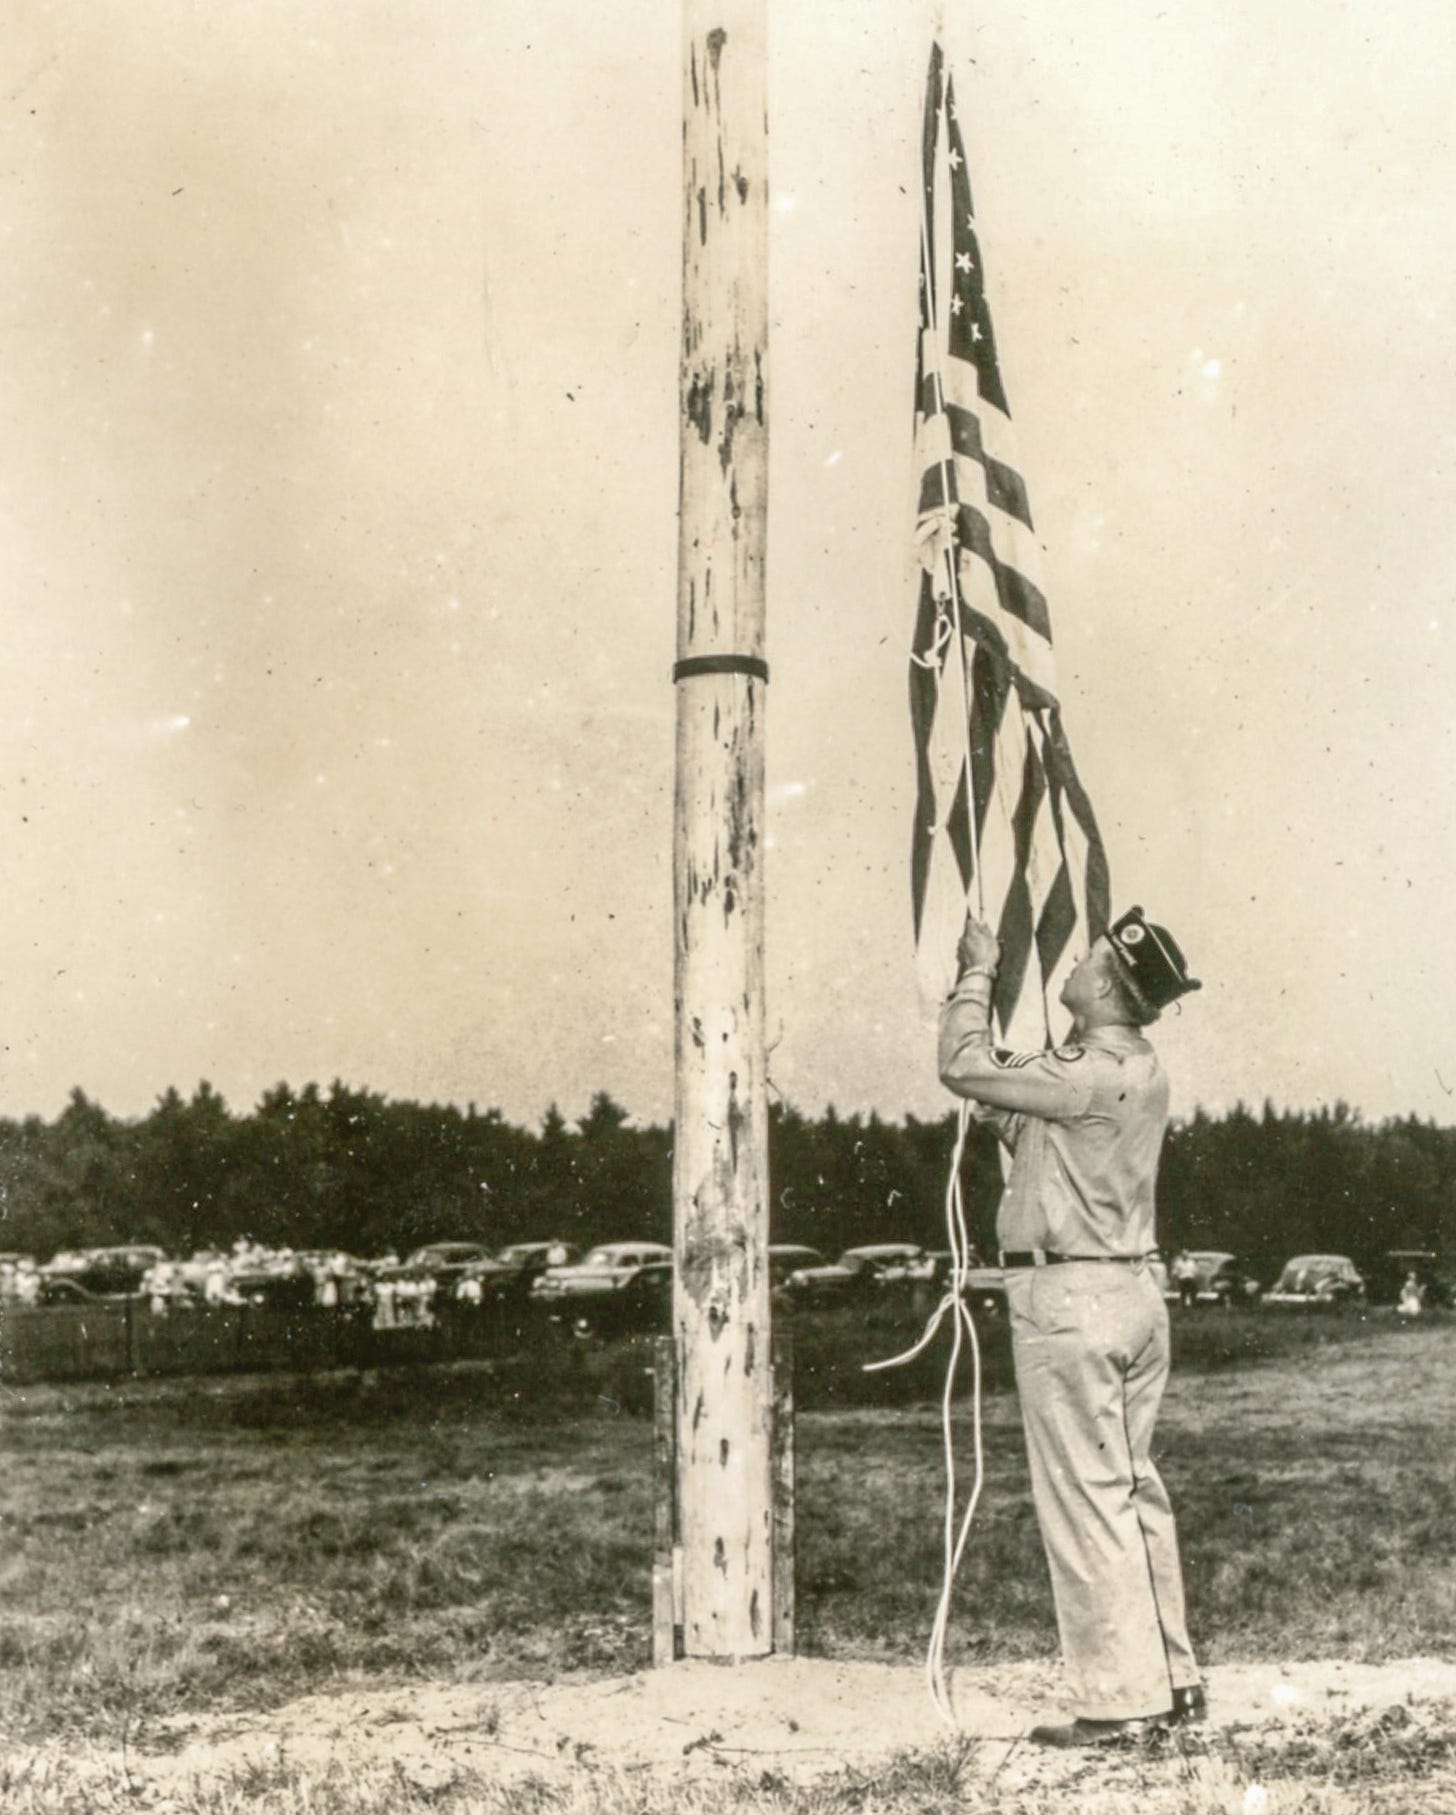 Man in uniform raising flag